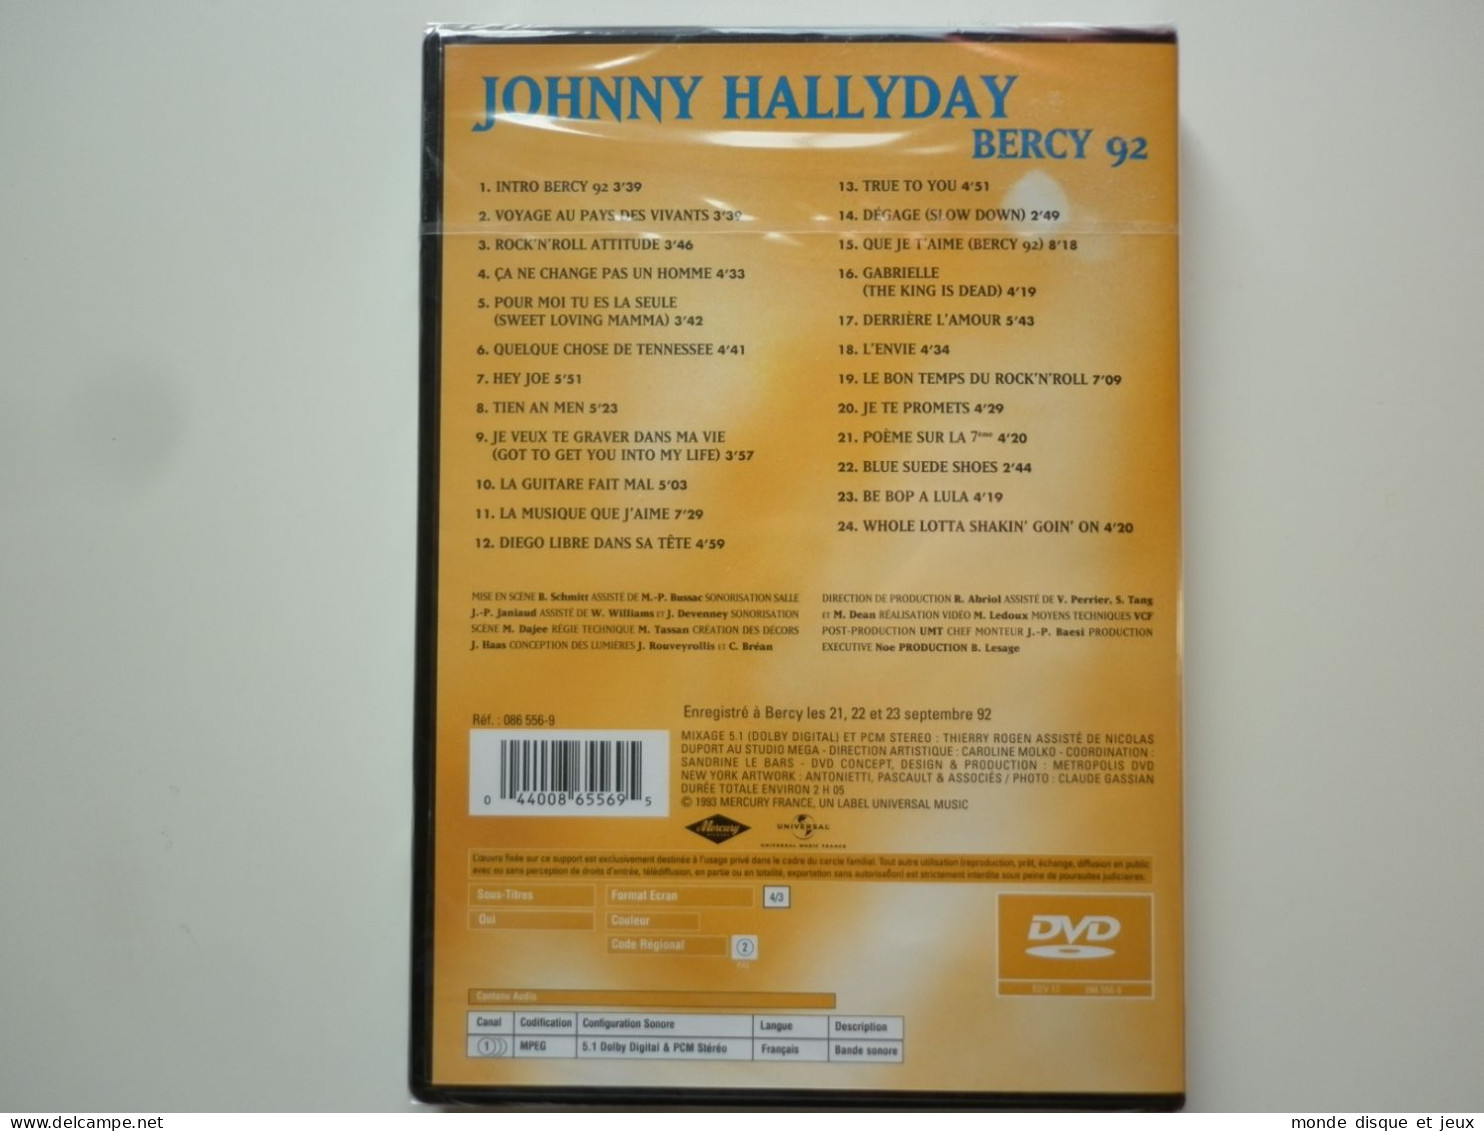 Johnny Hallyday Dvd Bercy 92 - Musik-DVD's